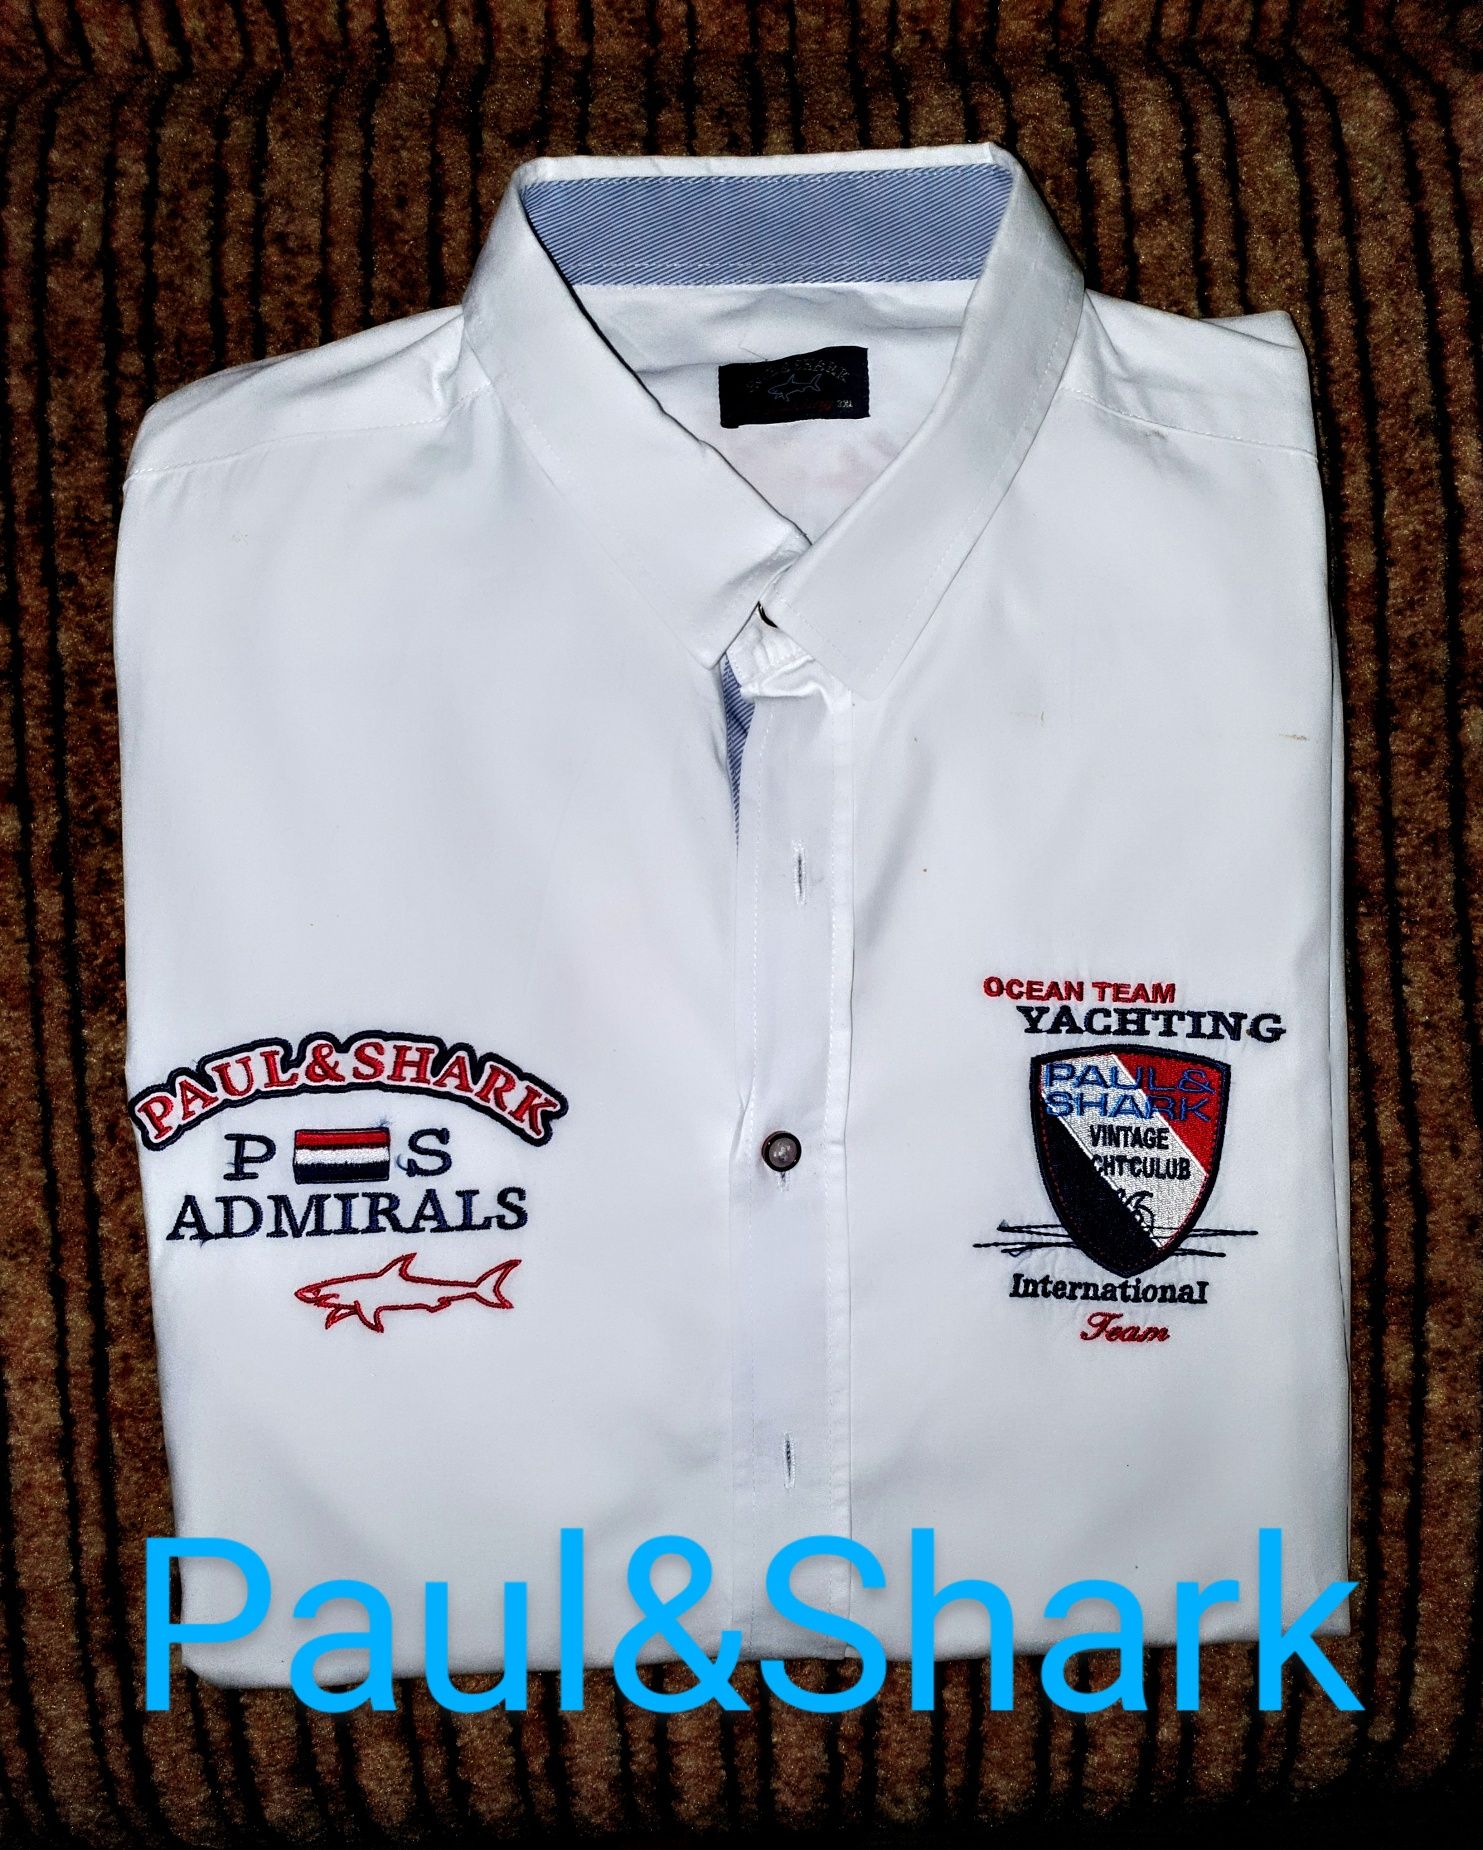 Zestaw 7 koszul Paul&Shark cena sklepowa to 5500 tys.